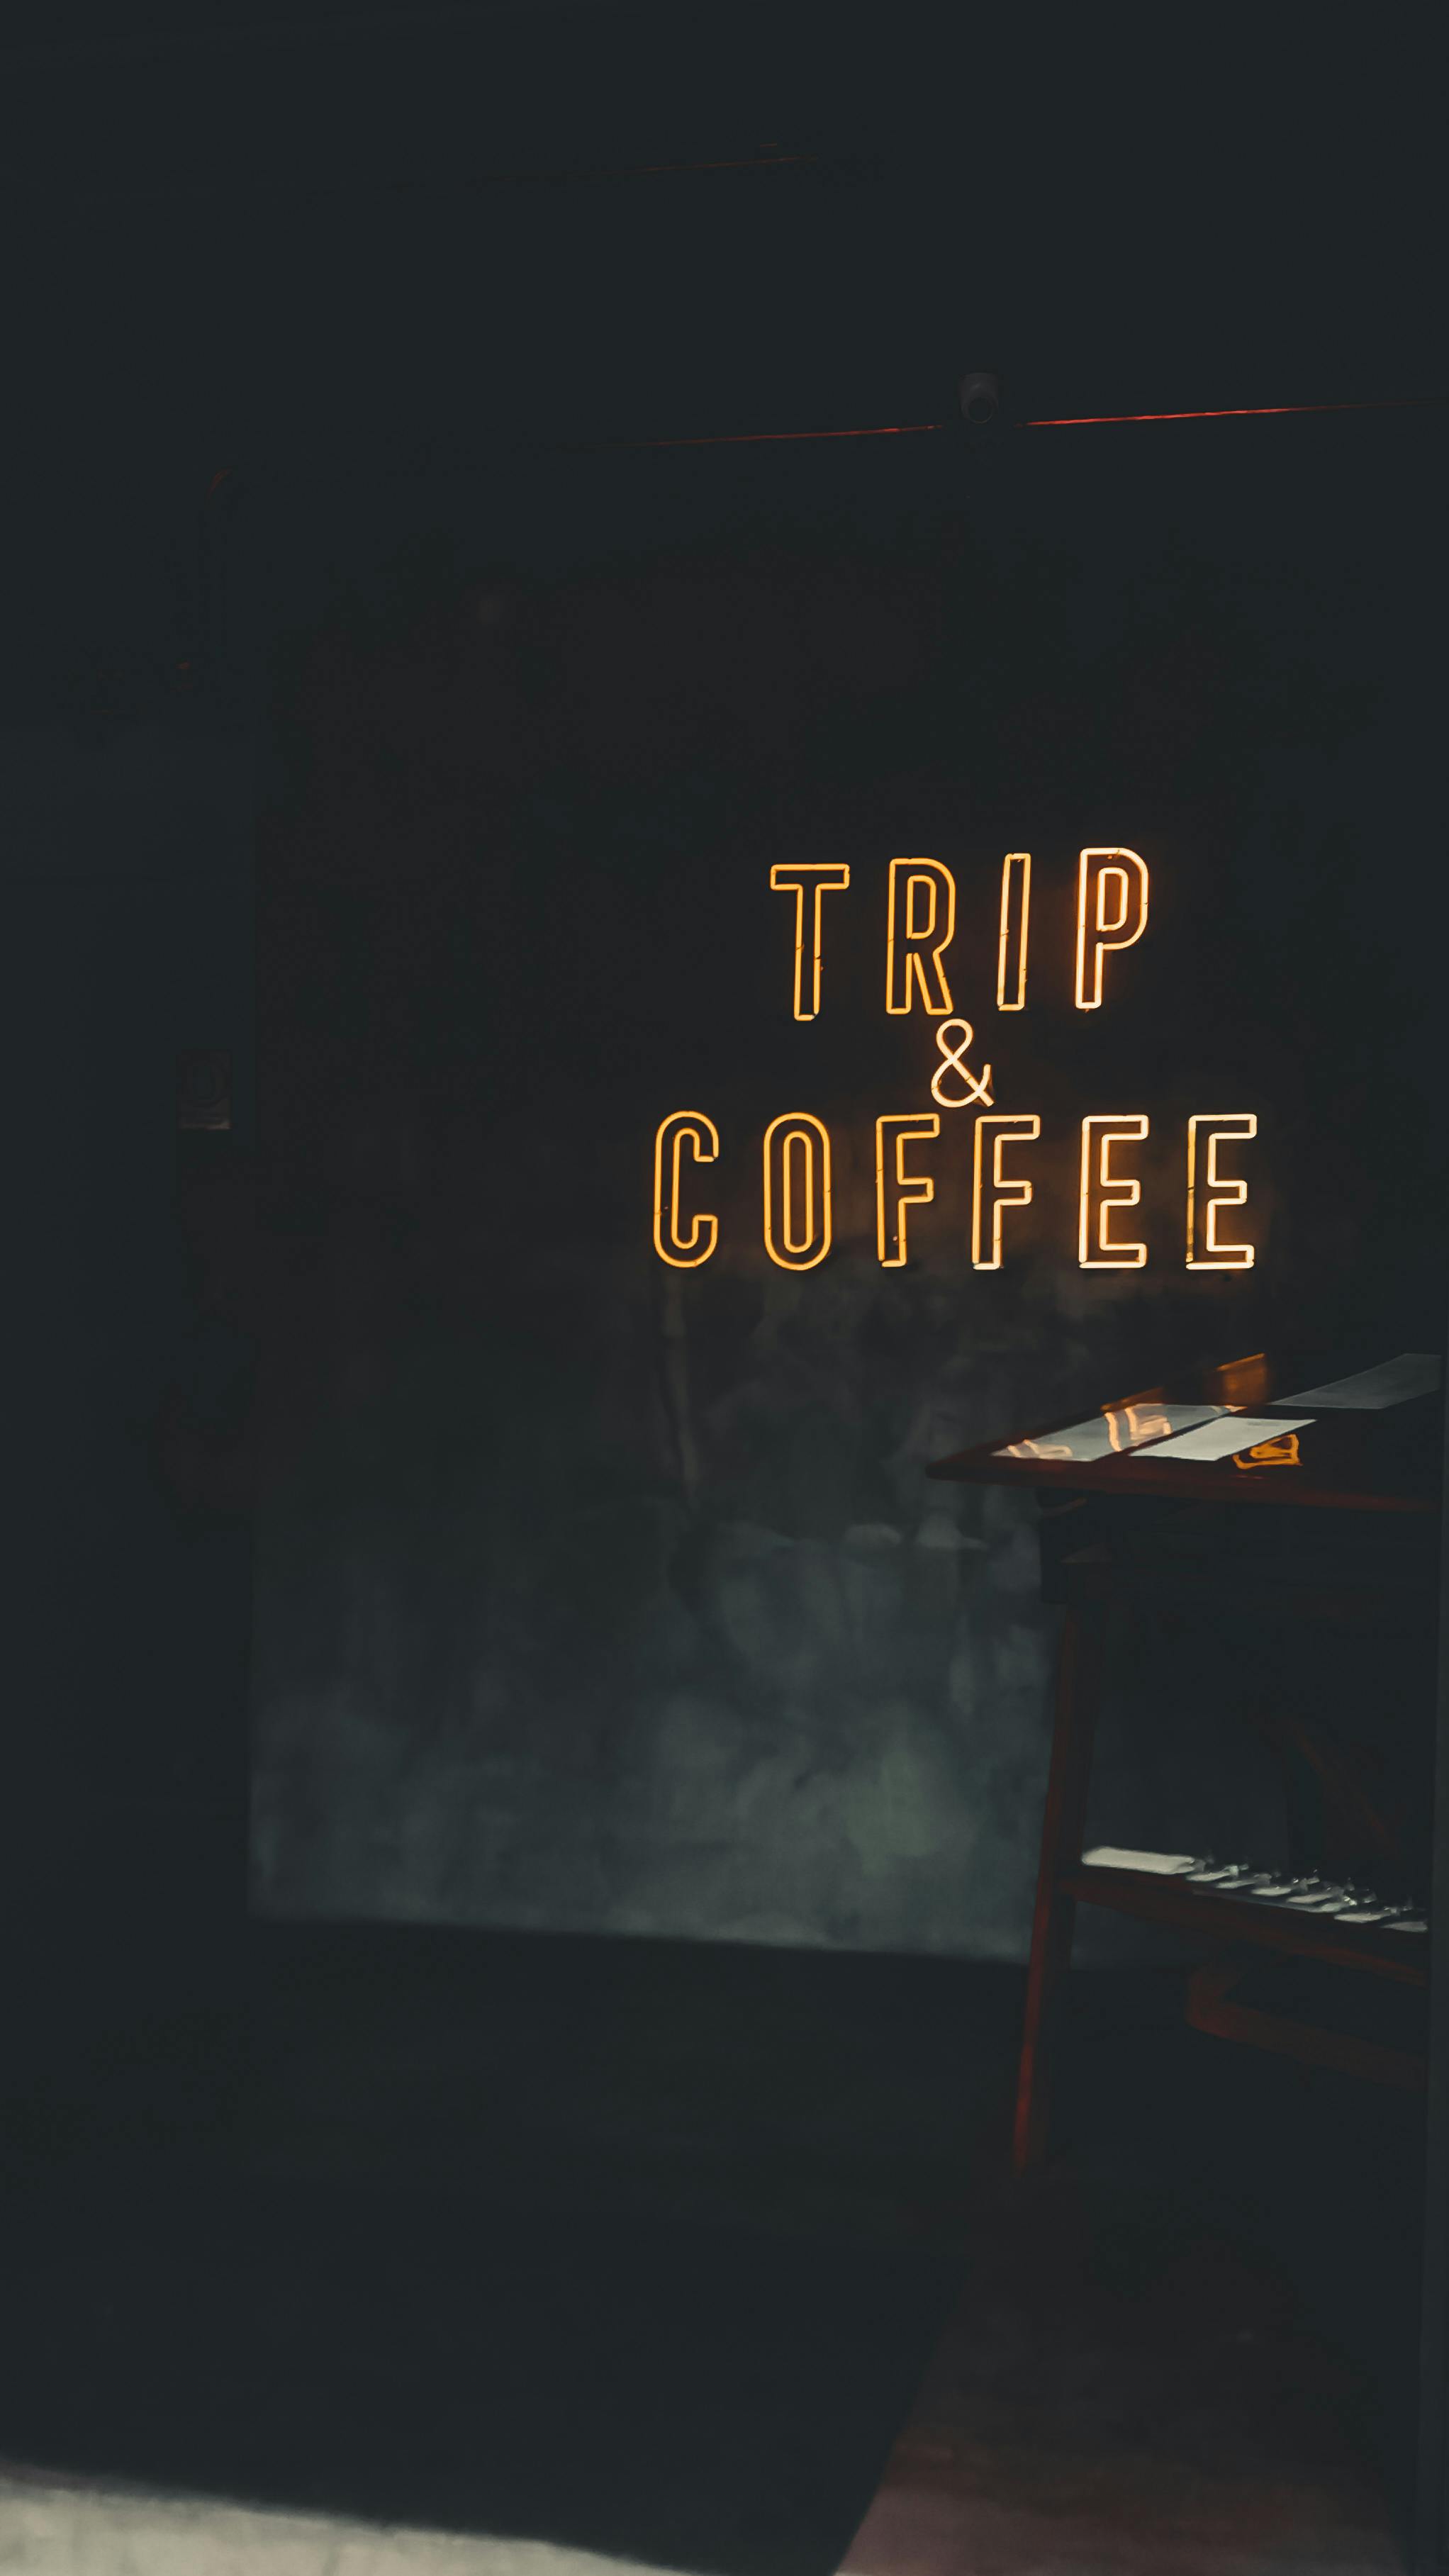 trip coffee sign